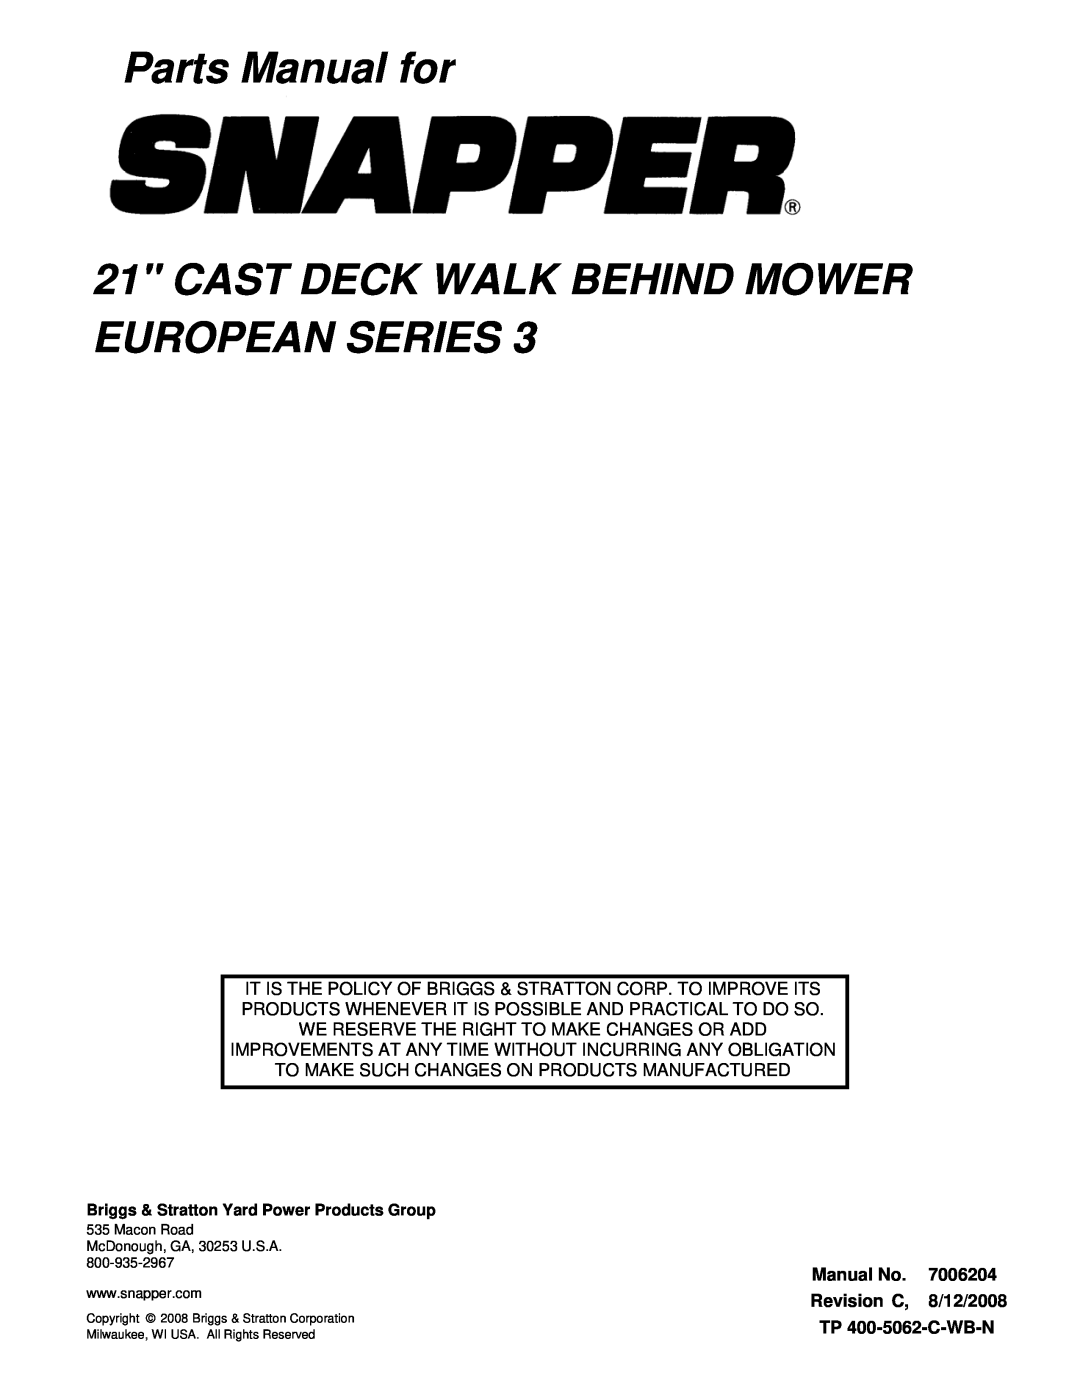 Snapper ELP21703BV(7800121) Cast Deck Walk Behind Mower European Series, Parts Manual for, Manual No, 7006204, Revision C 